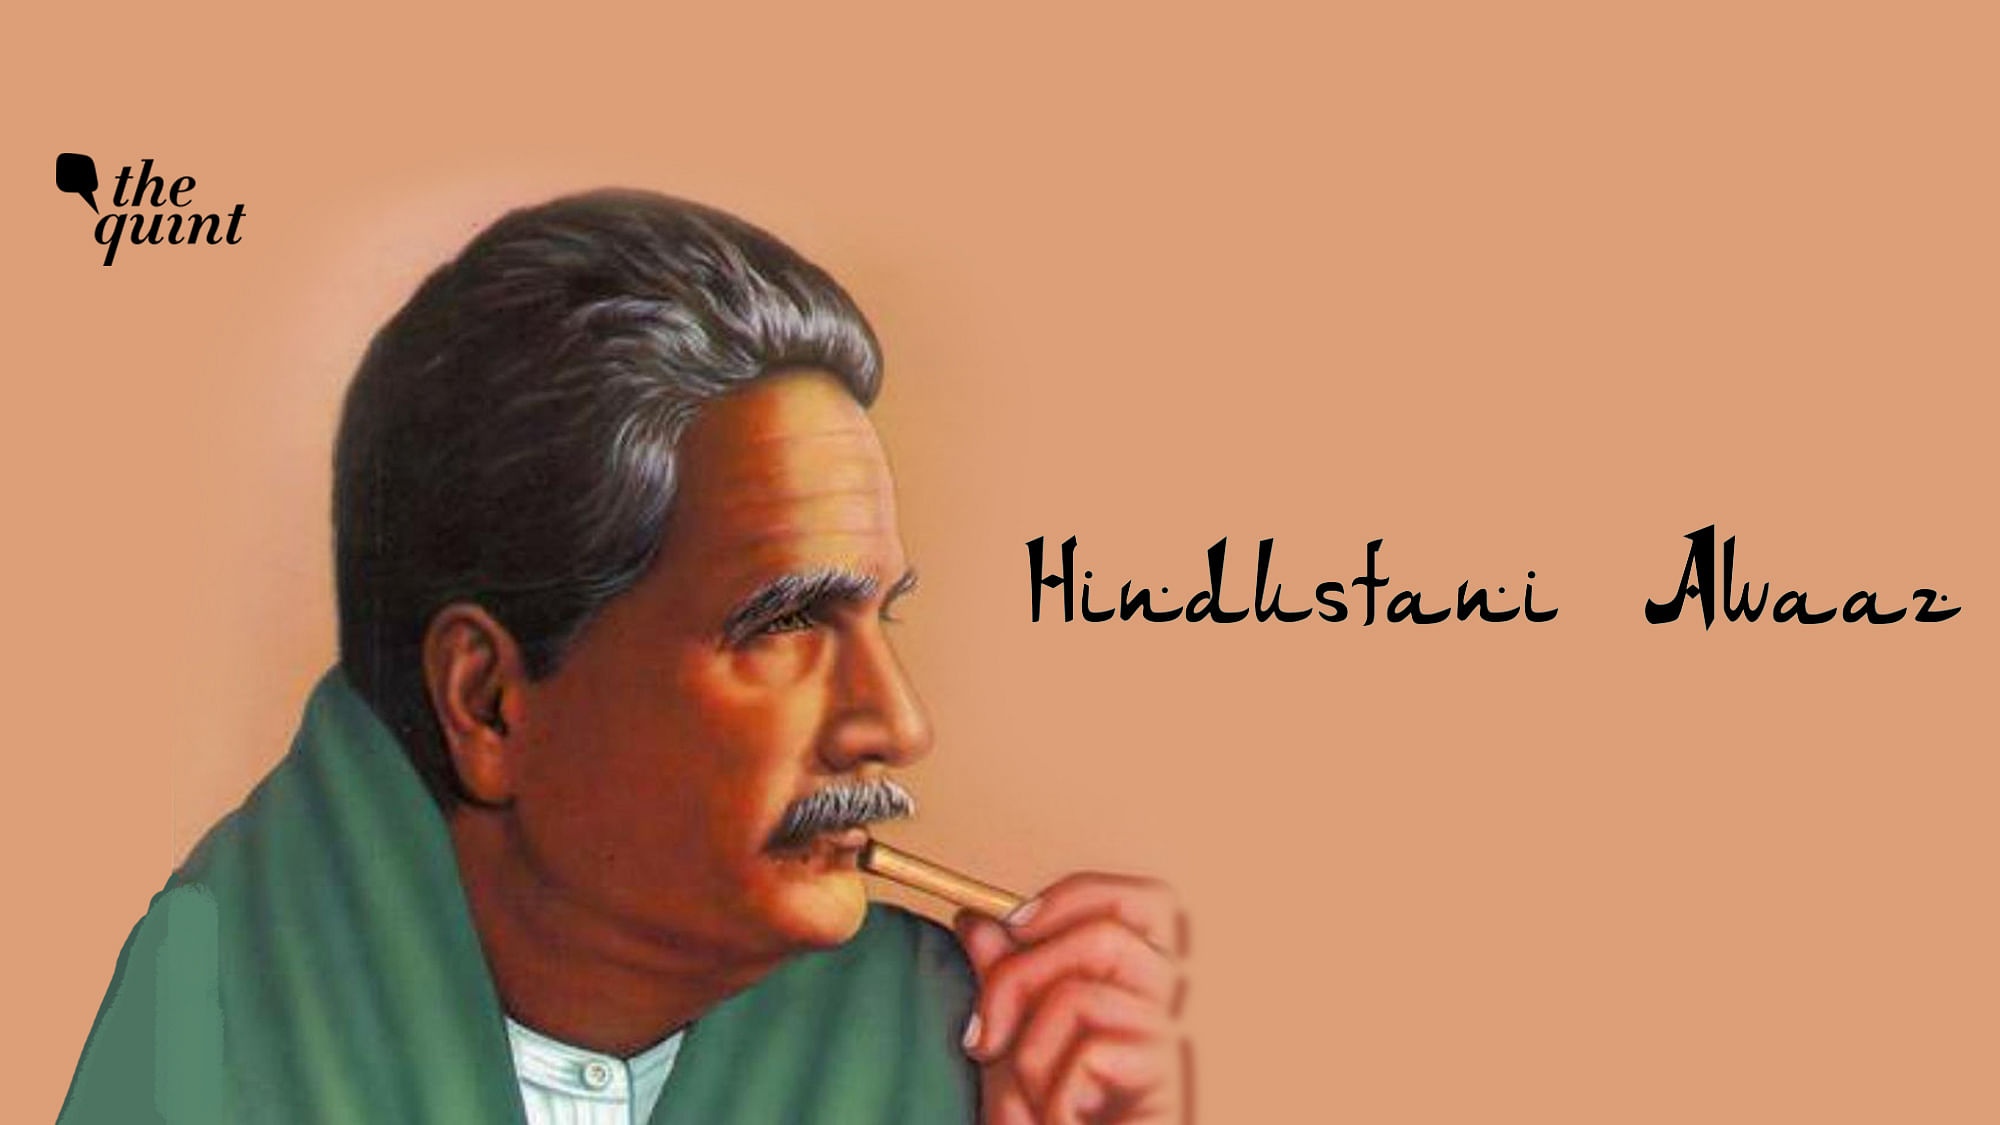  Image of Pakistan’s national poet Iqbal used for representational purposes.